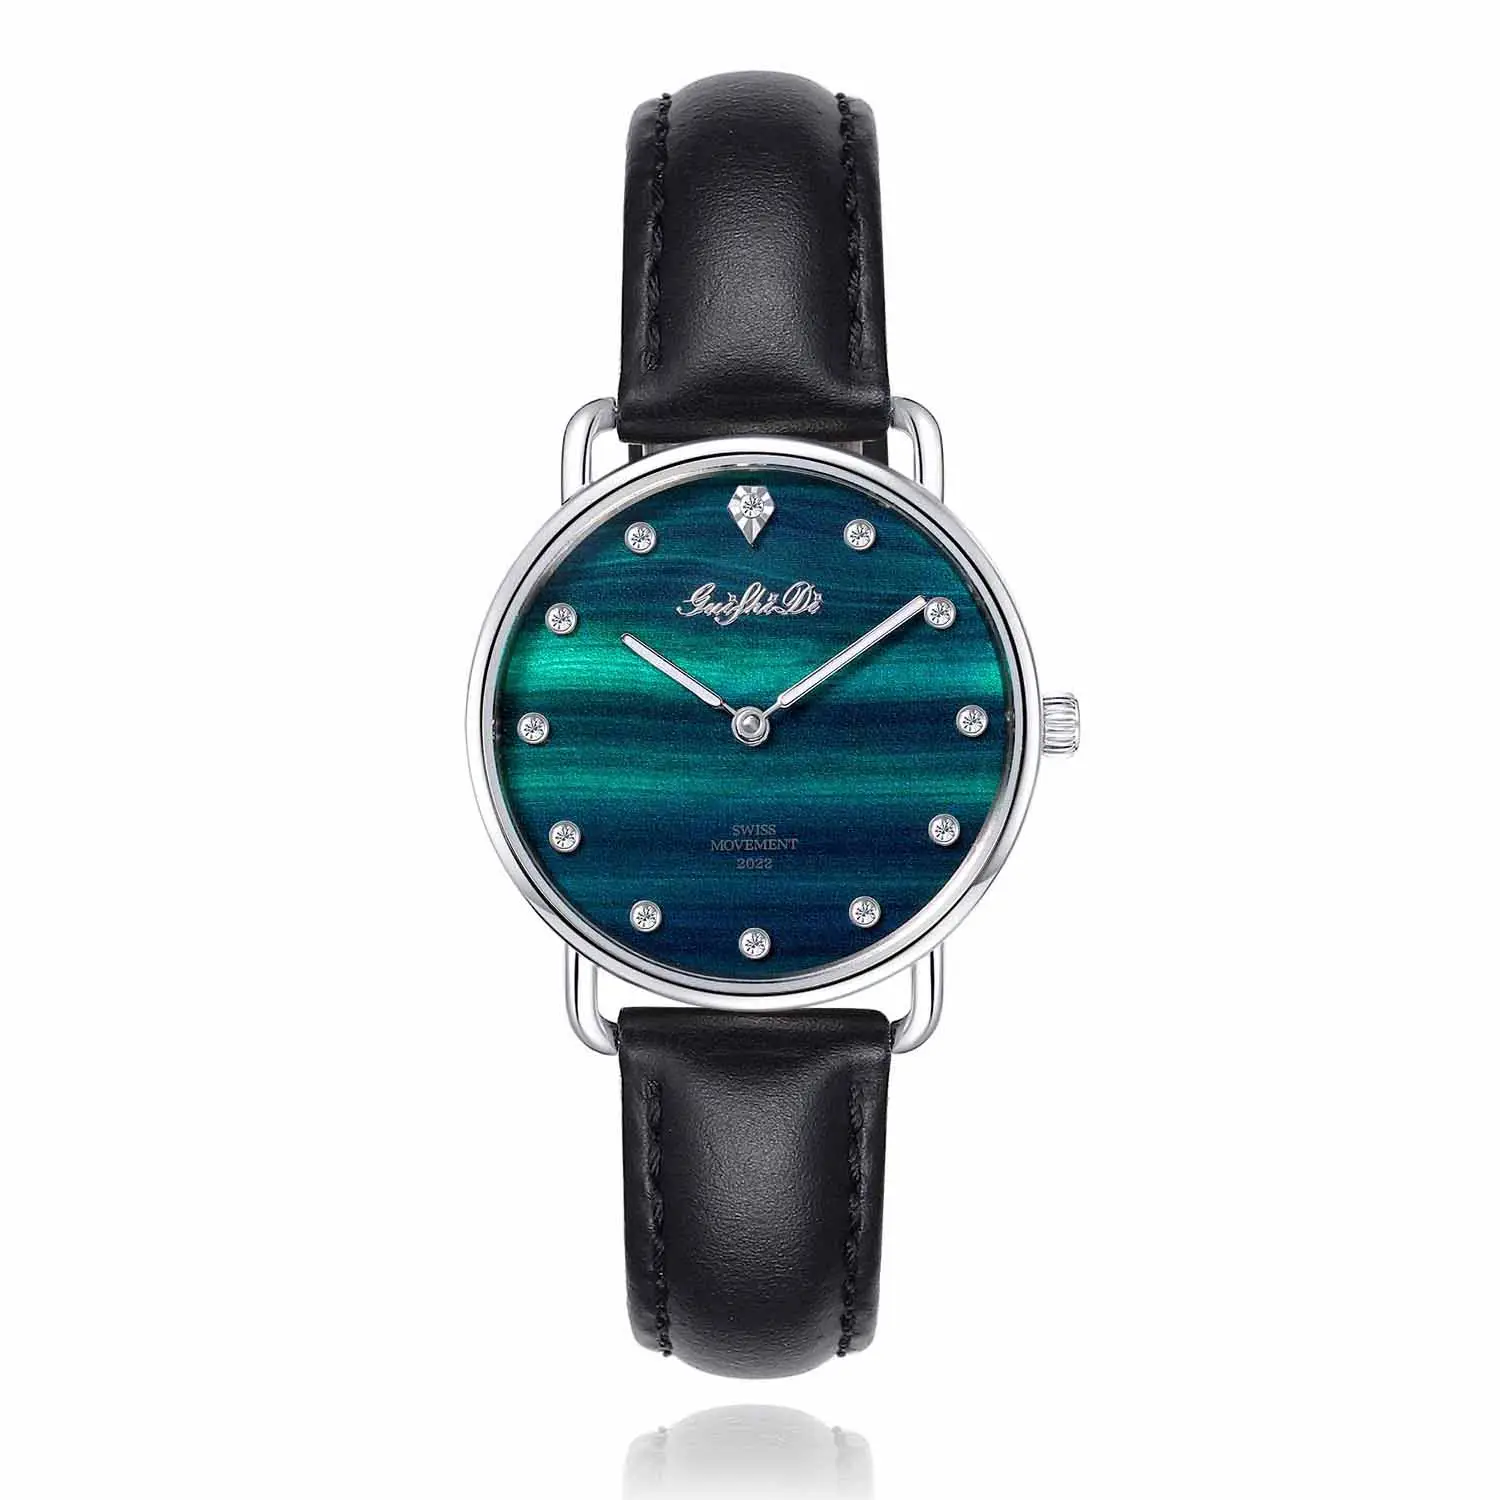 Guishidi Ladies Casual Quartz Leather Band Wrist Watch 3 Atm Water Resistant Analog Quartz Watch Price Iced Watch For Women